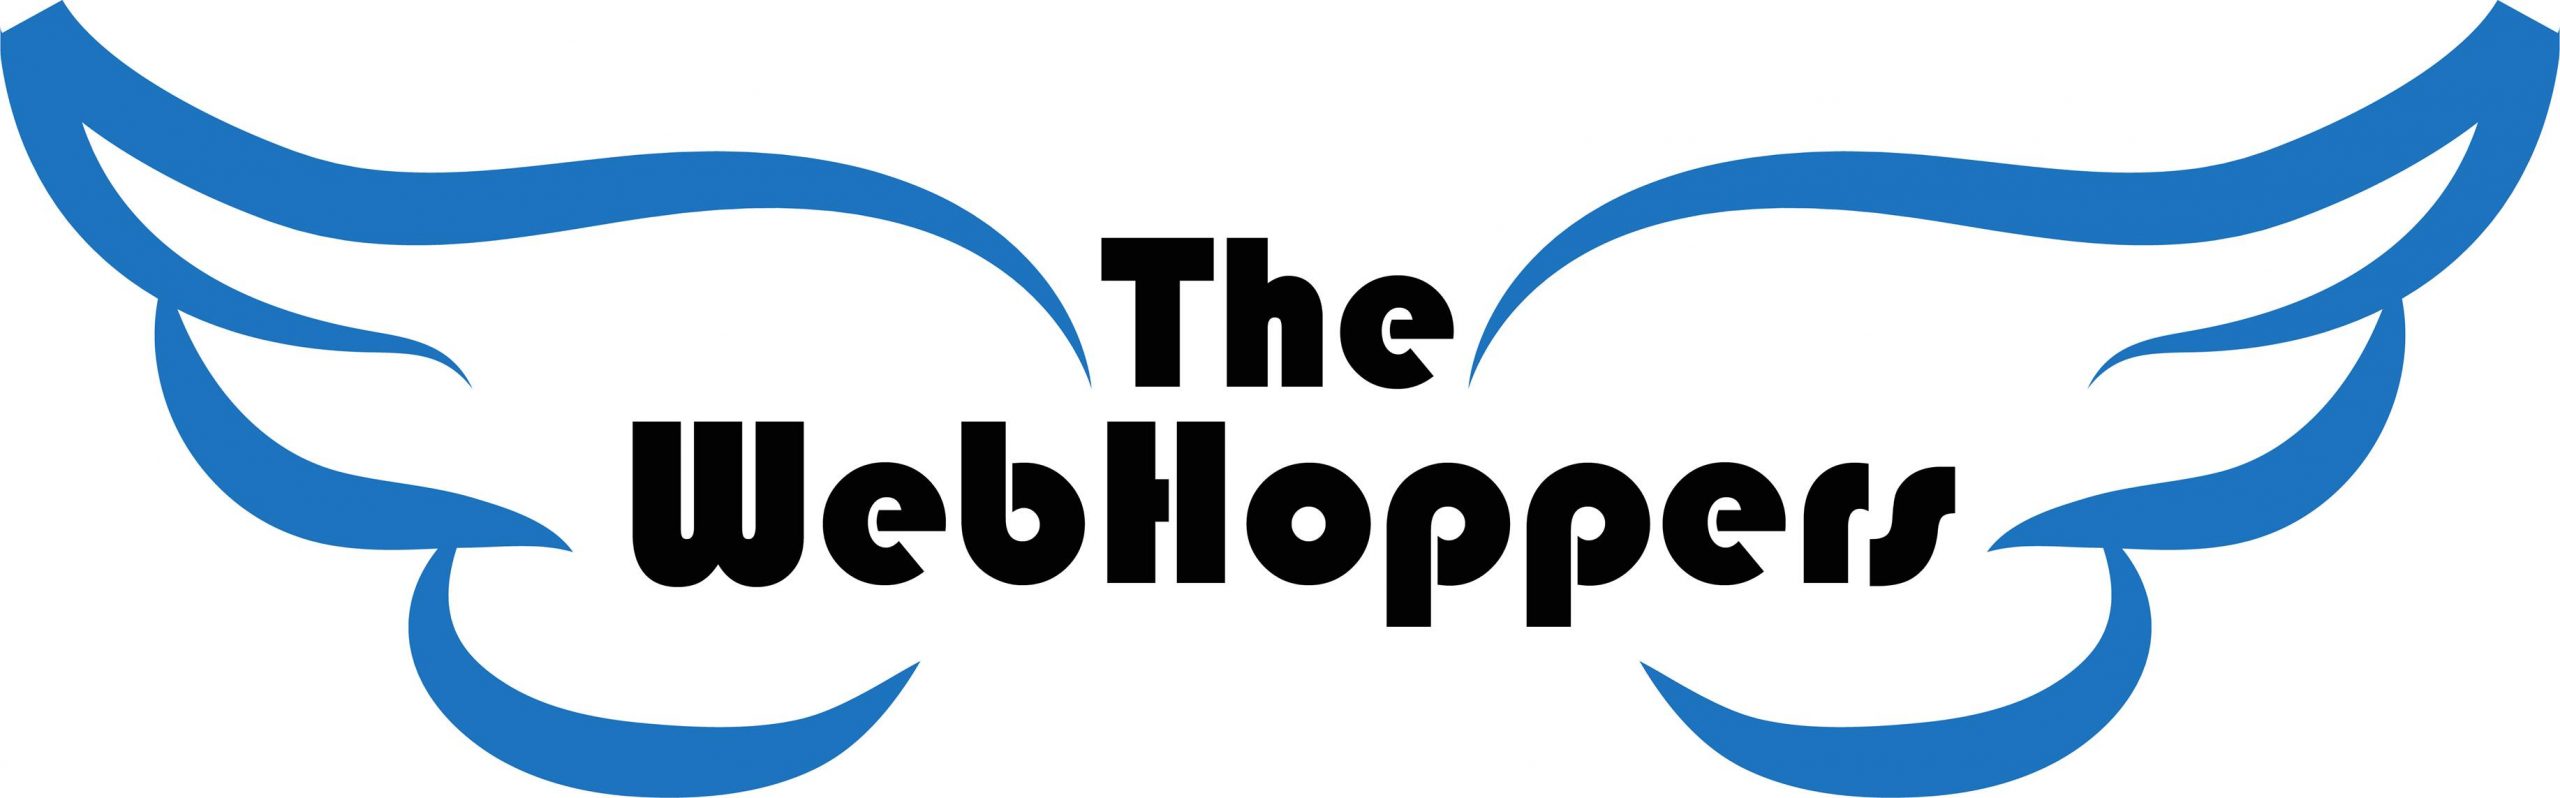 TheWebHoppers